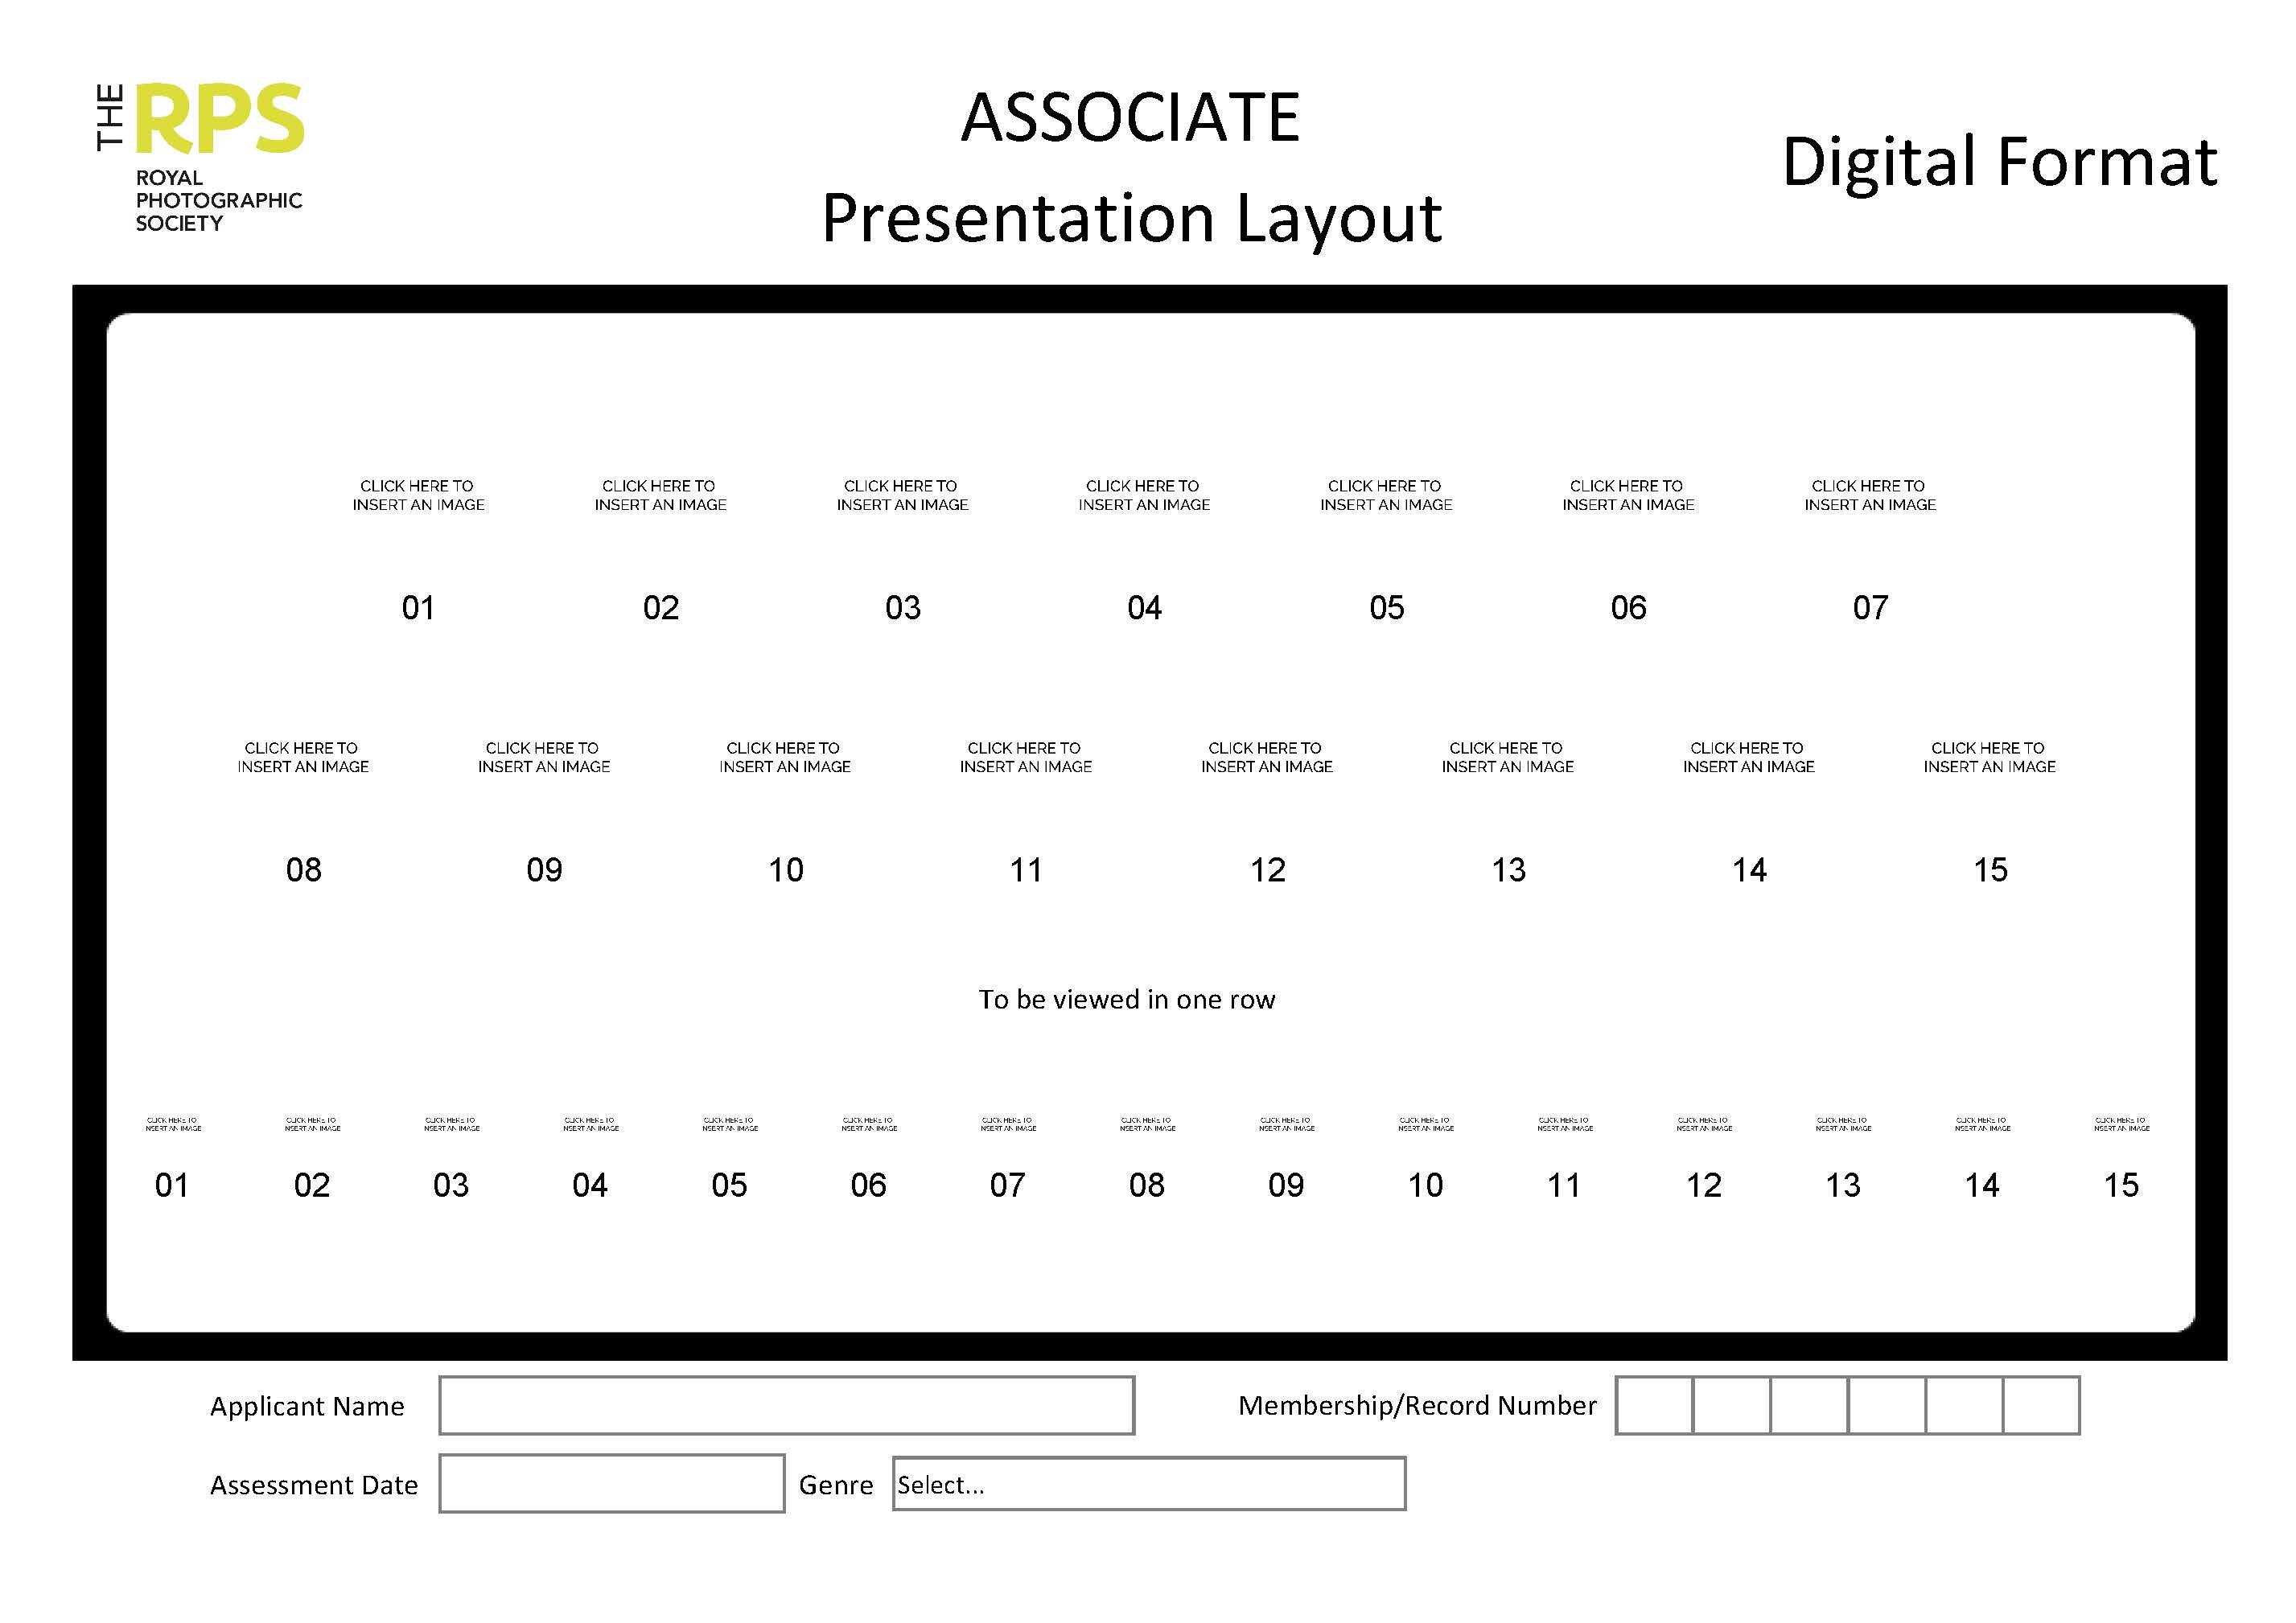 ARPS 2021 Presentation Layout 15 DIGITAL